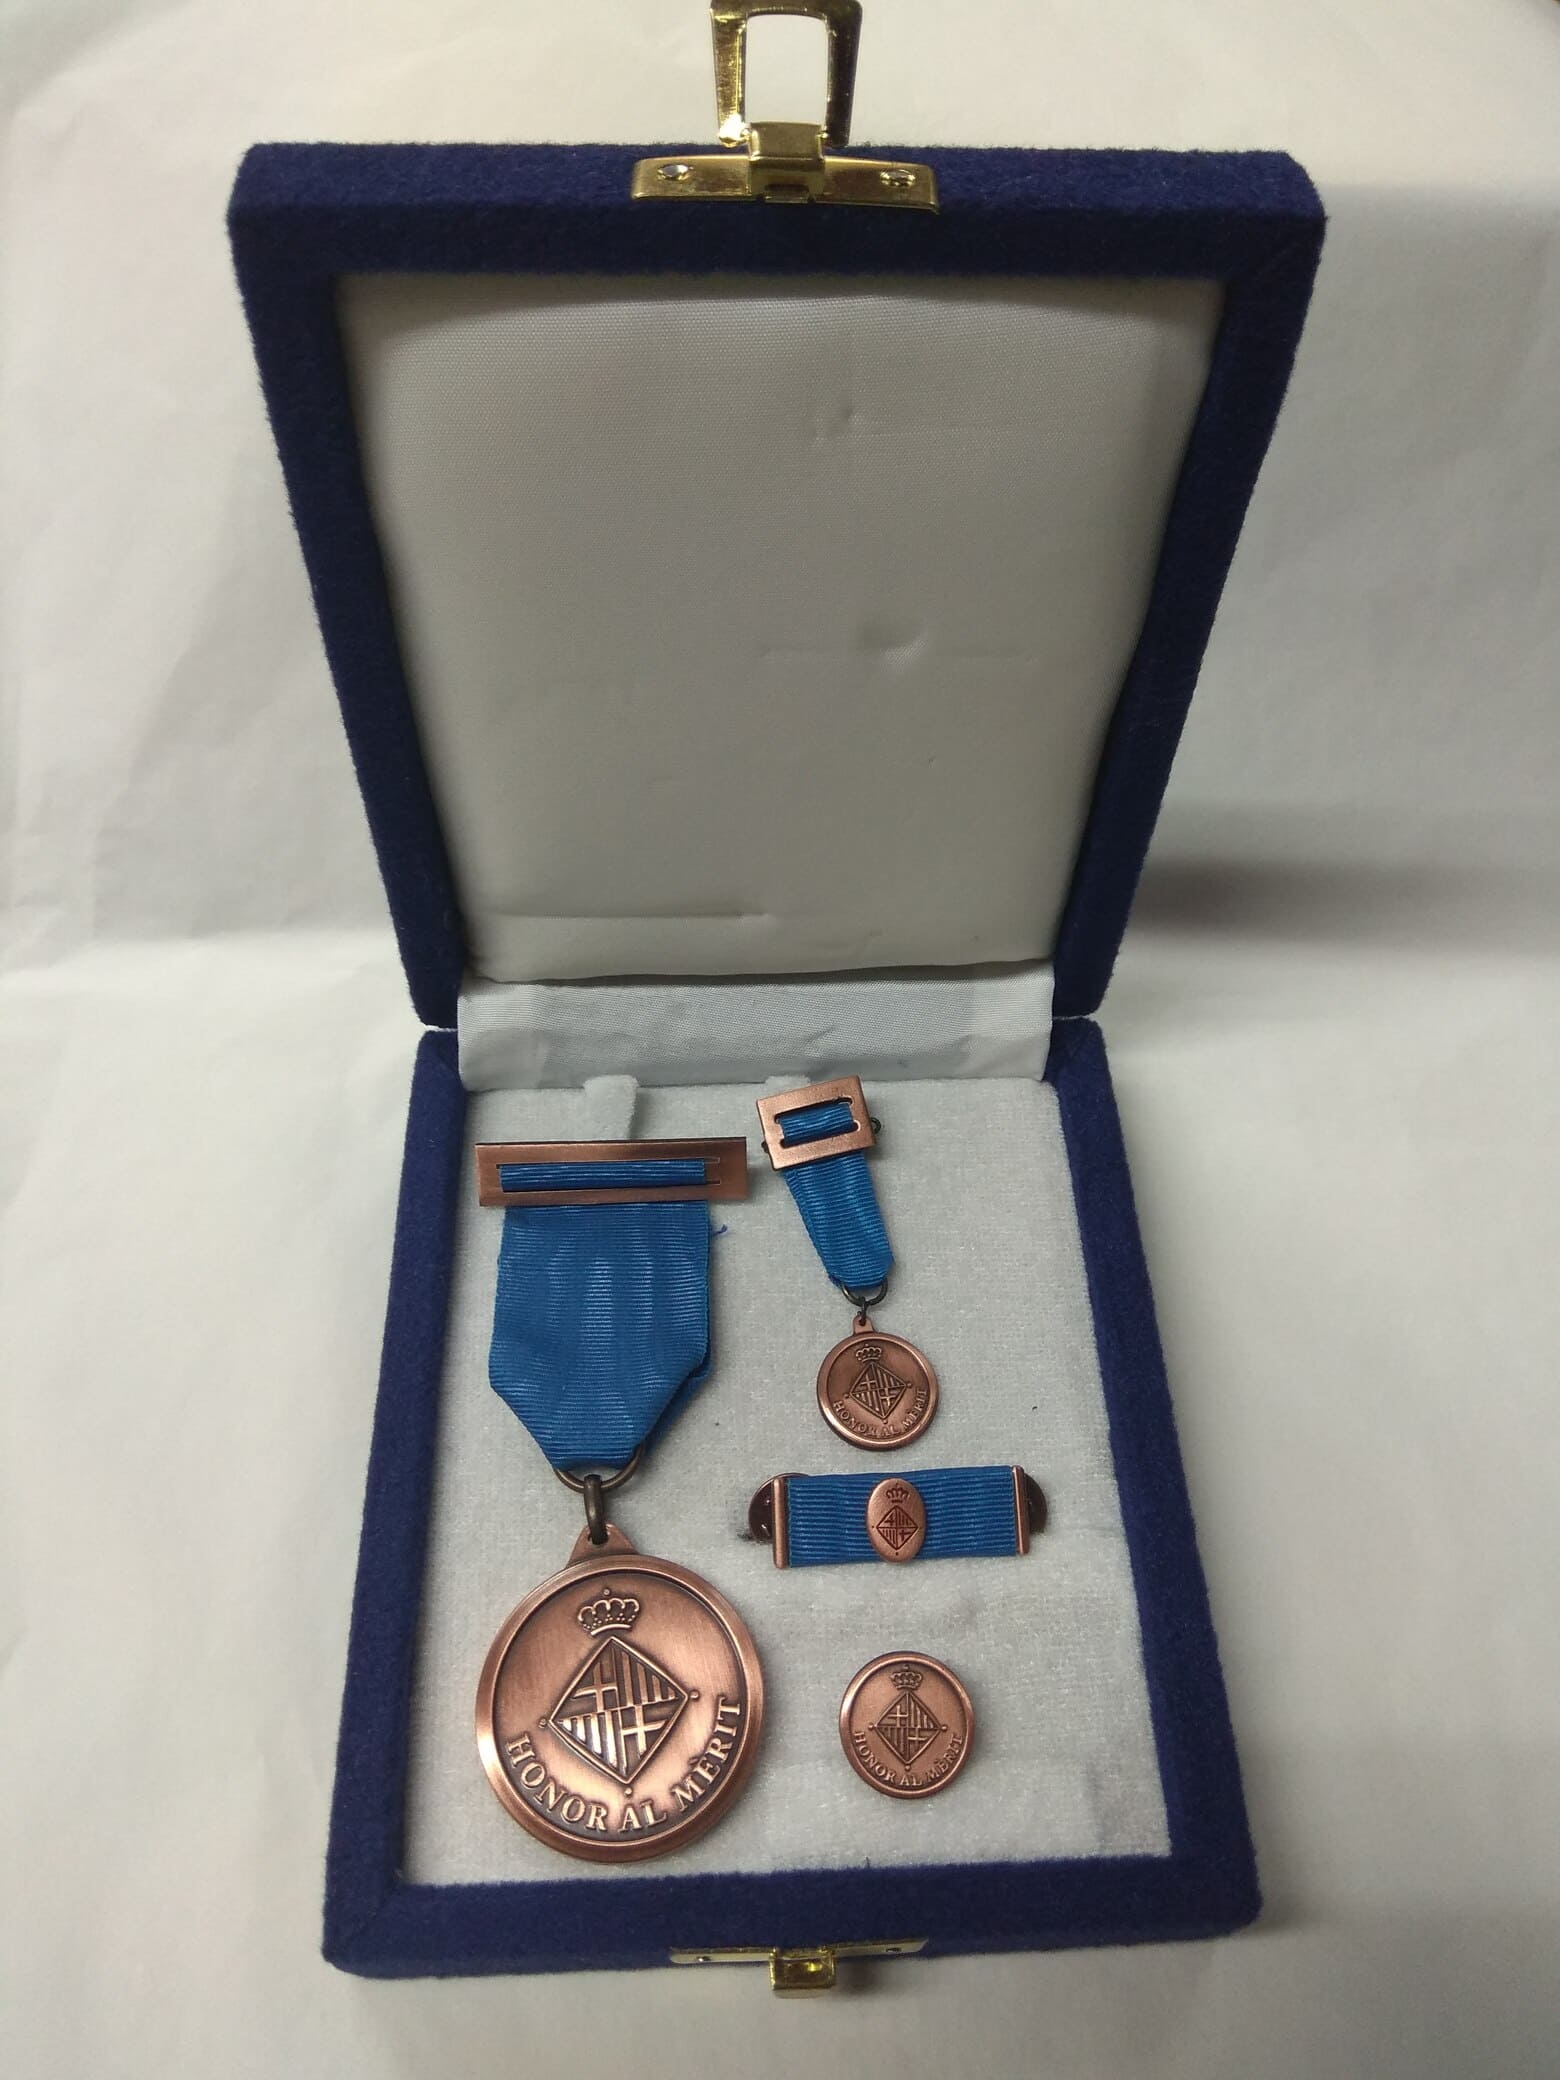 Medalla condecoració encunyada